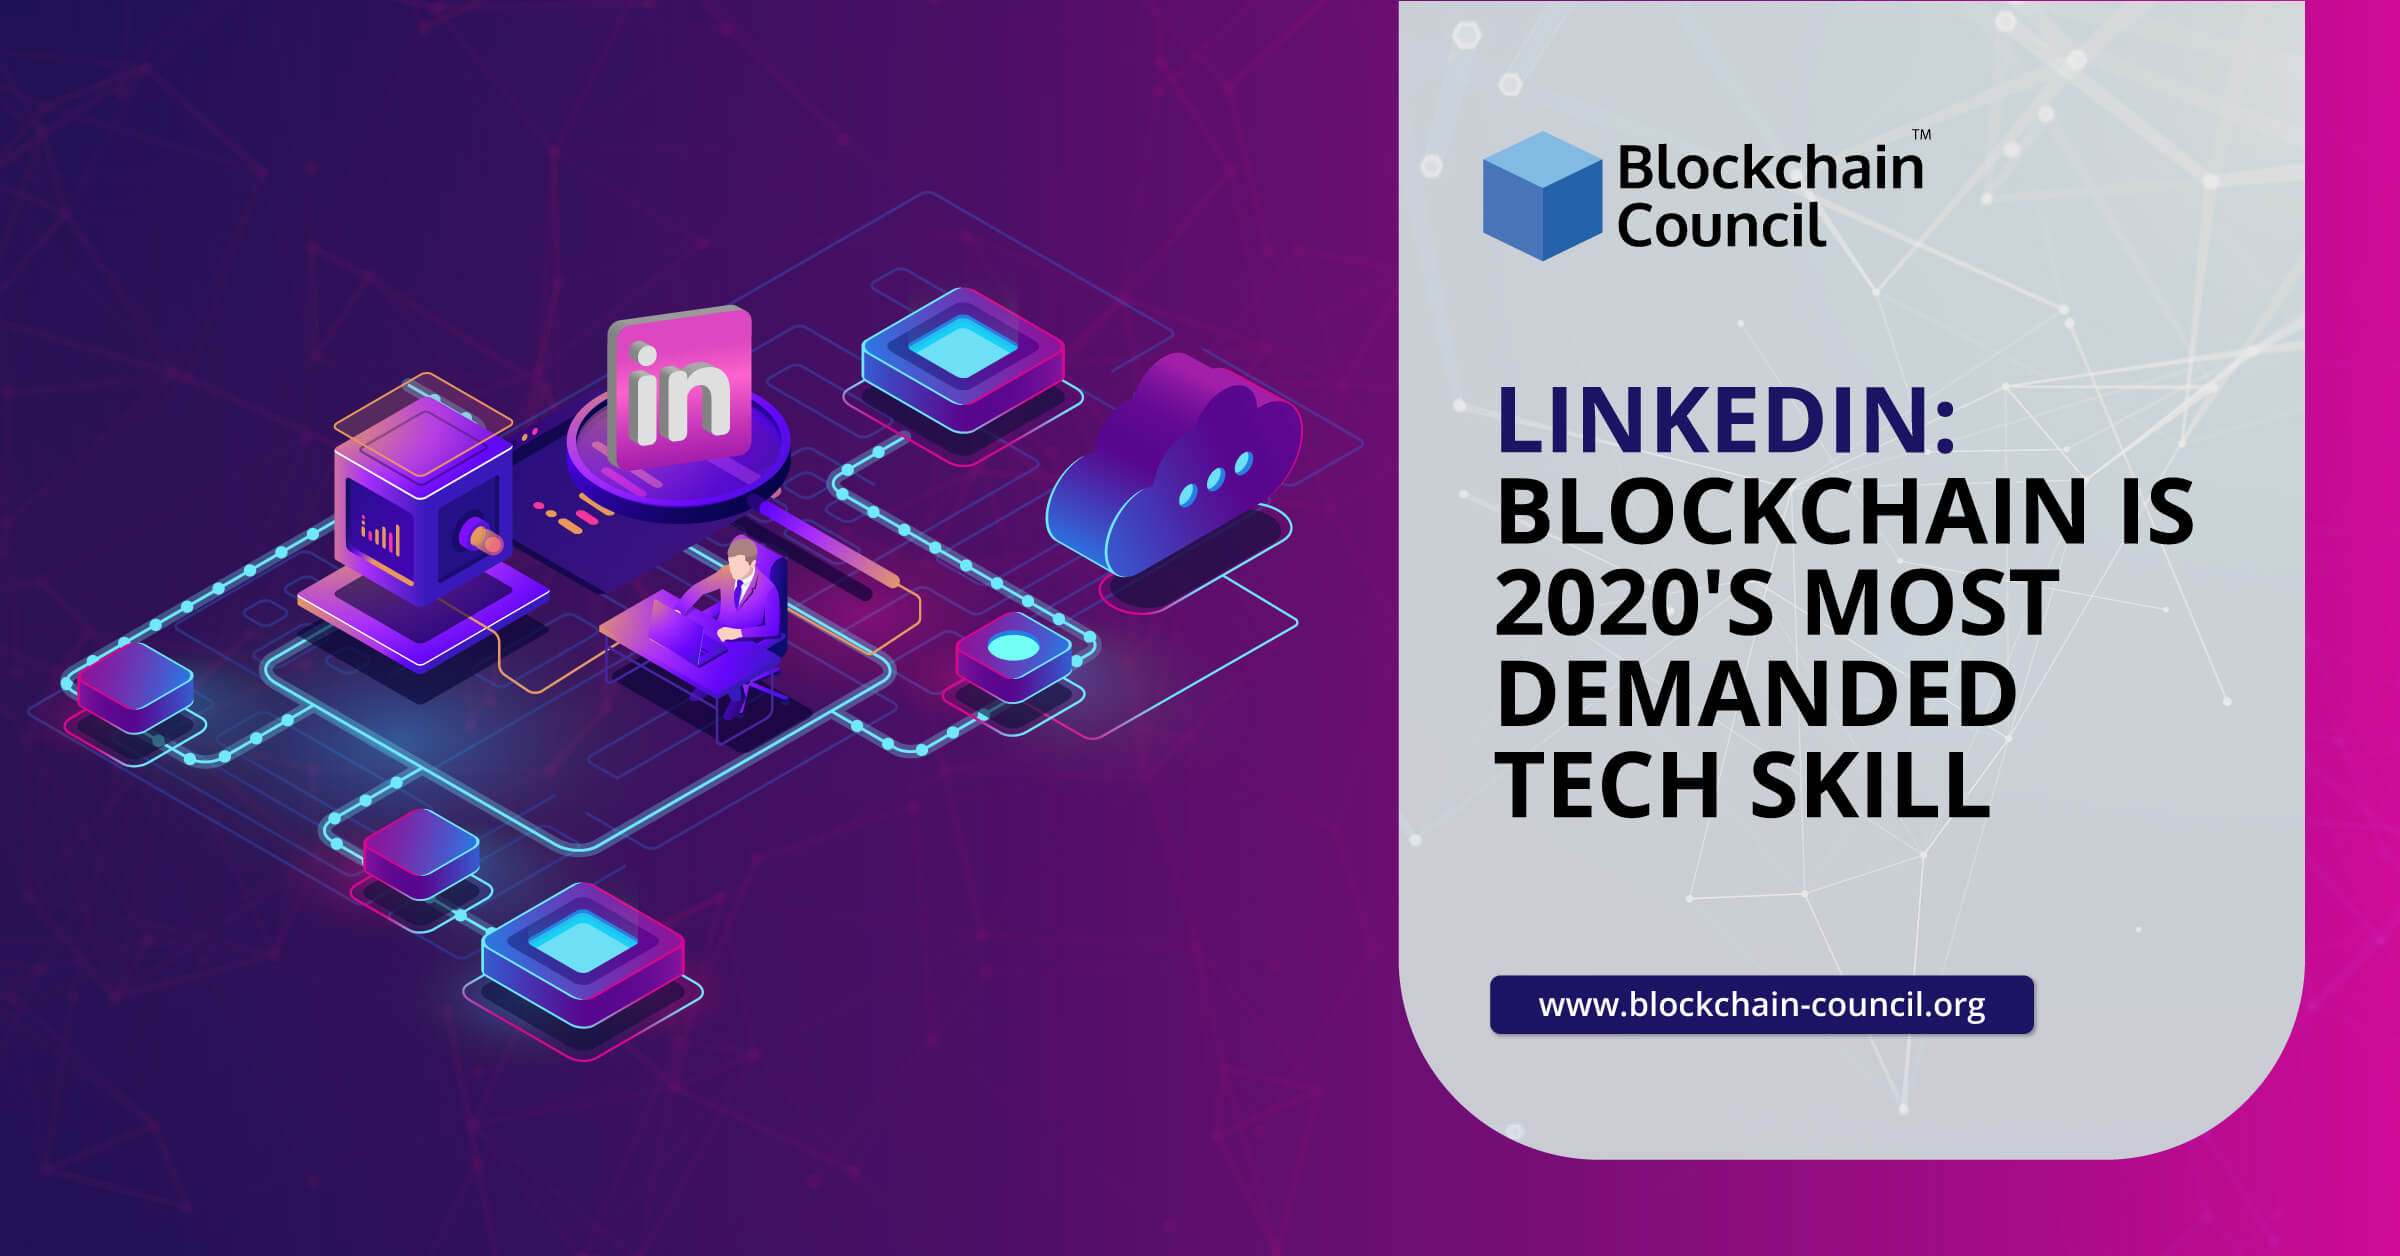 Linkedin: Blockchain is 2020’s Most Demanded Tech Skill